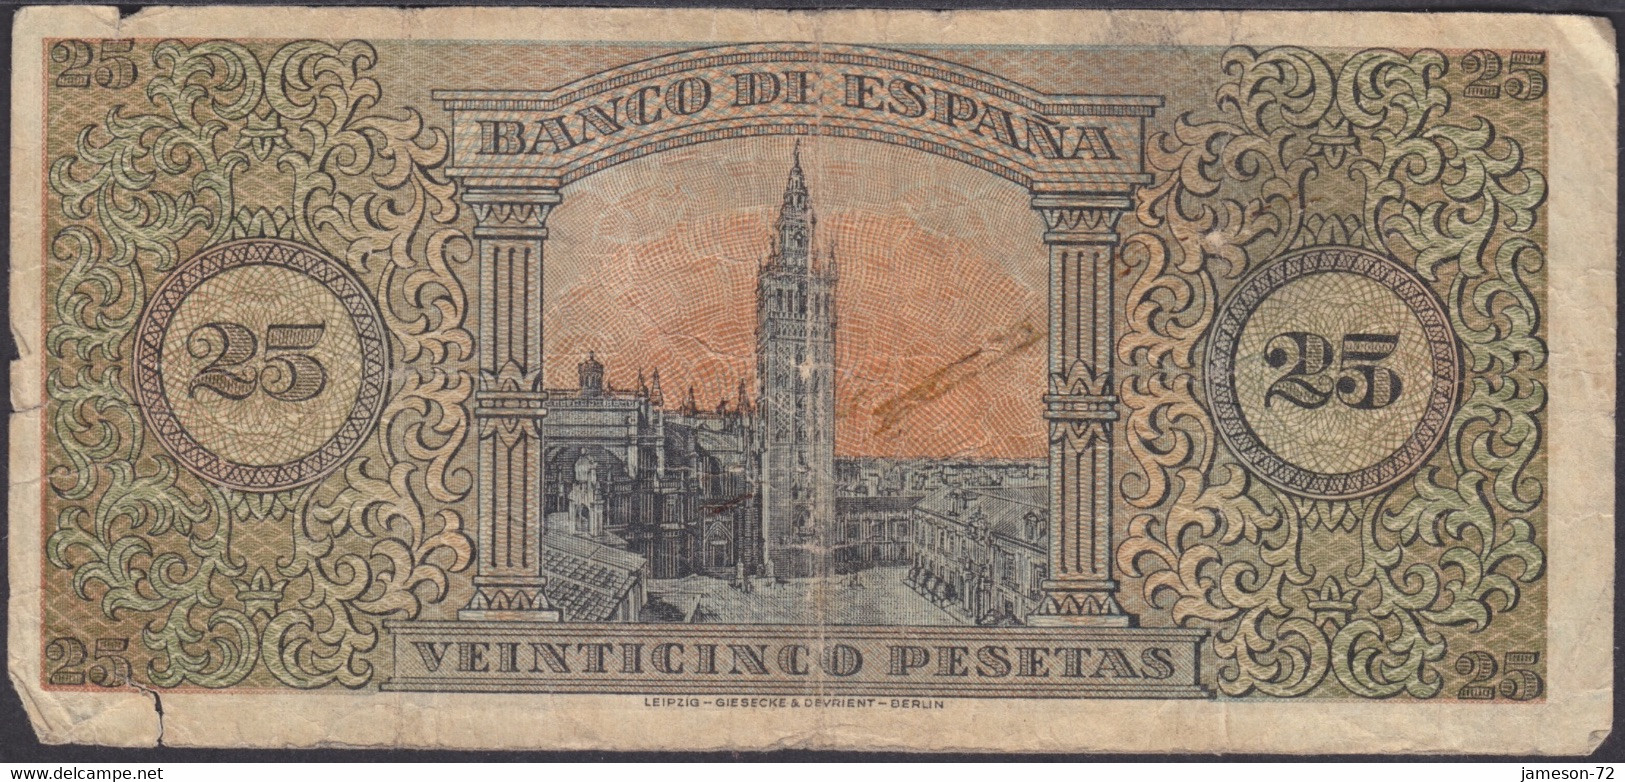 SPAIN - 25 Pesetas 1938 "Giralda In Seville" P# 111 Europe Banknote - Edelweiss Coins - 25 Pesetas